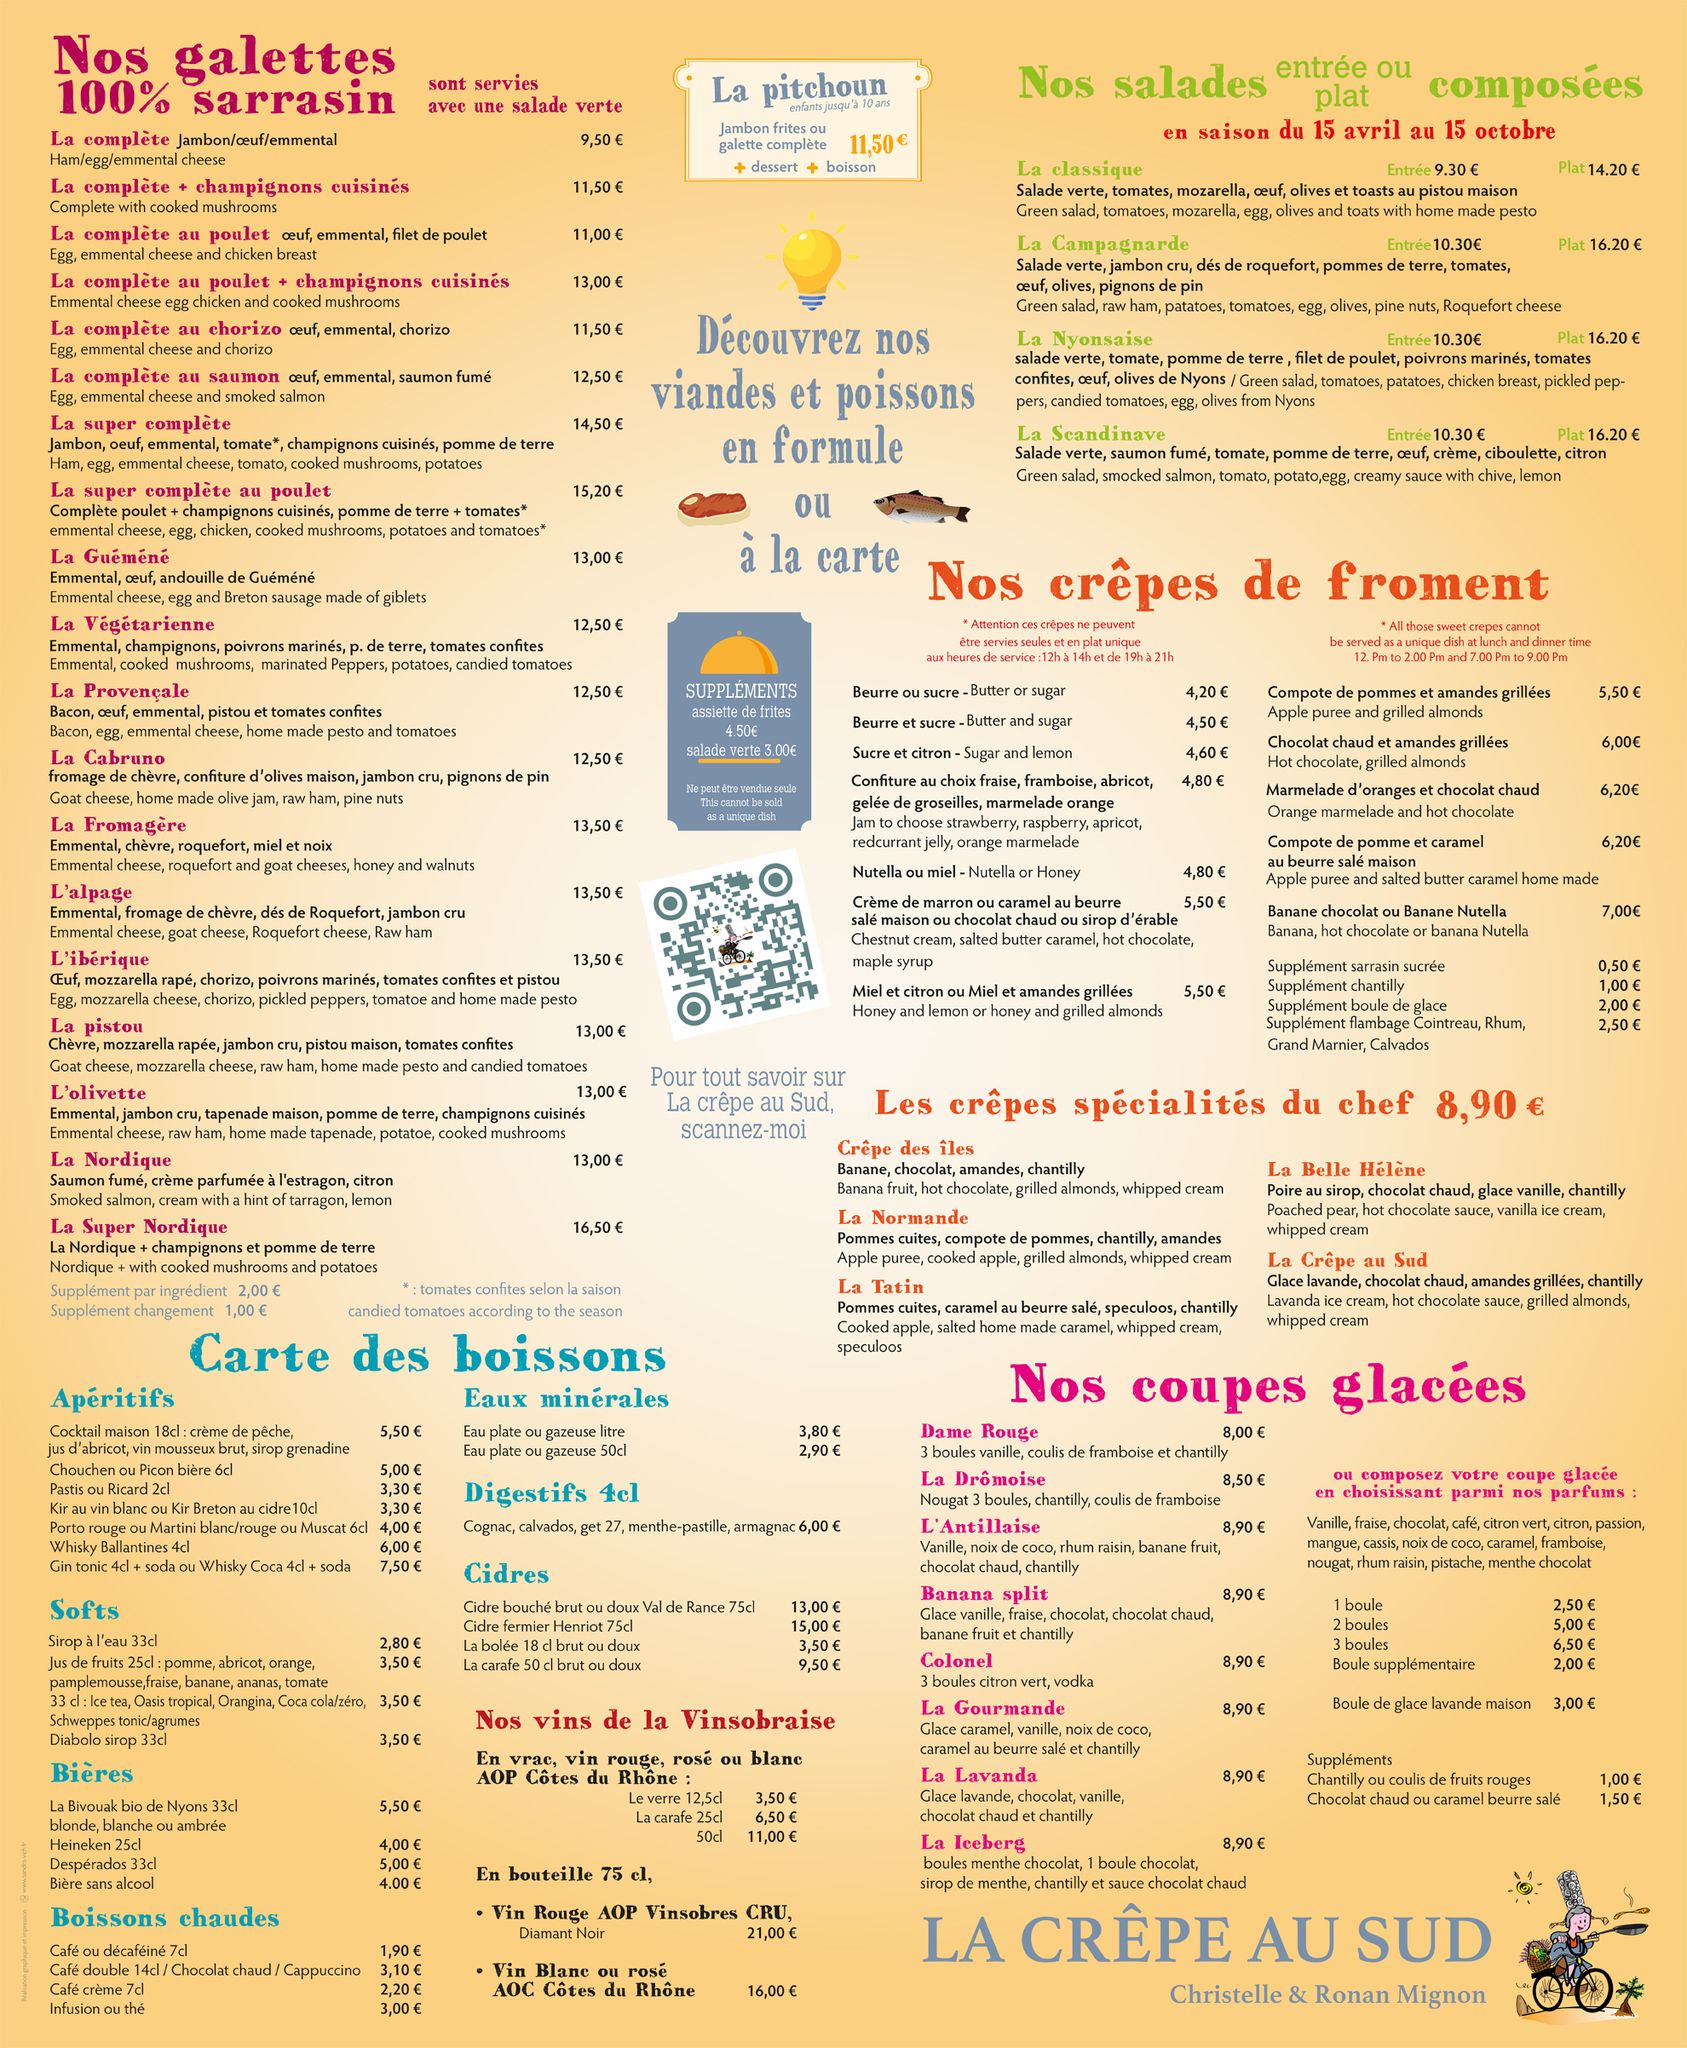 image representing the menu of the restaurant. 